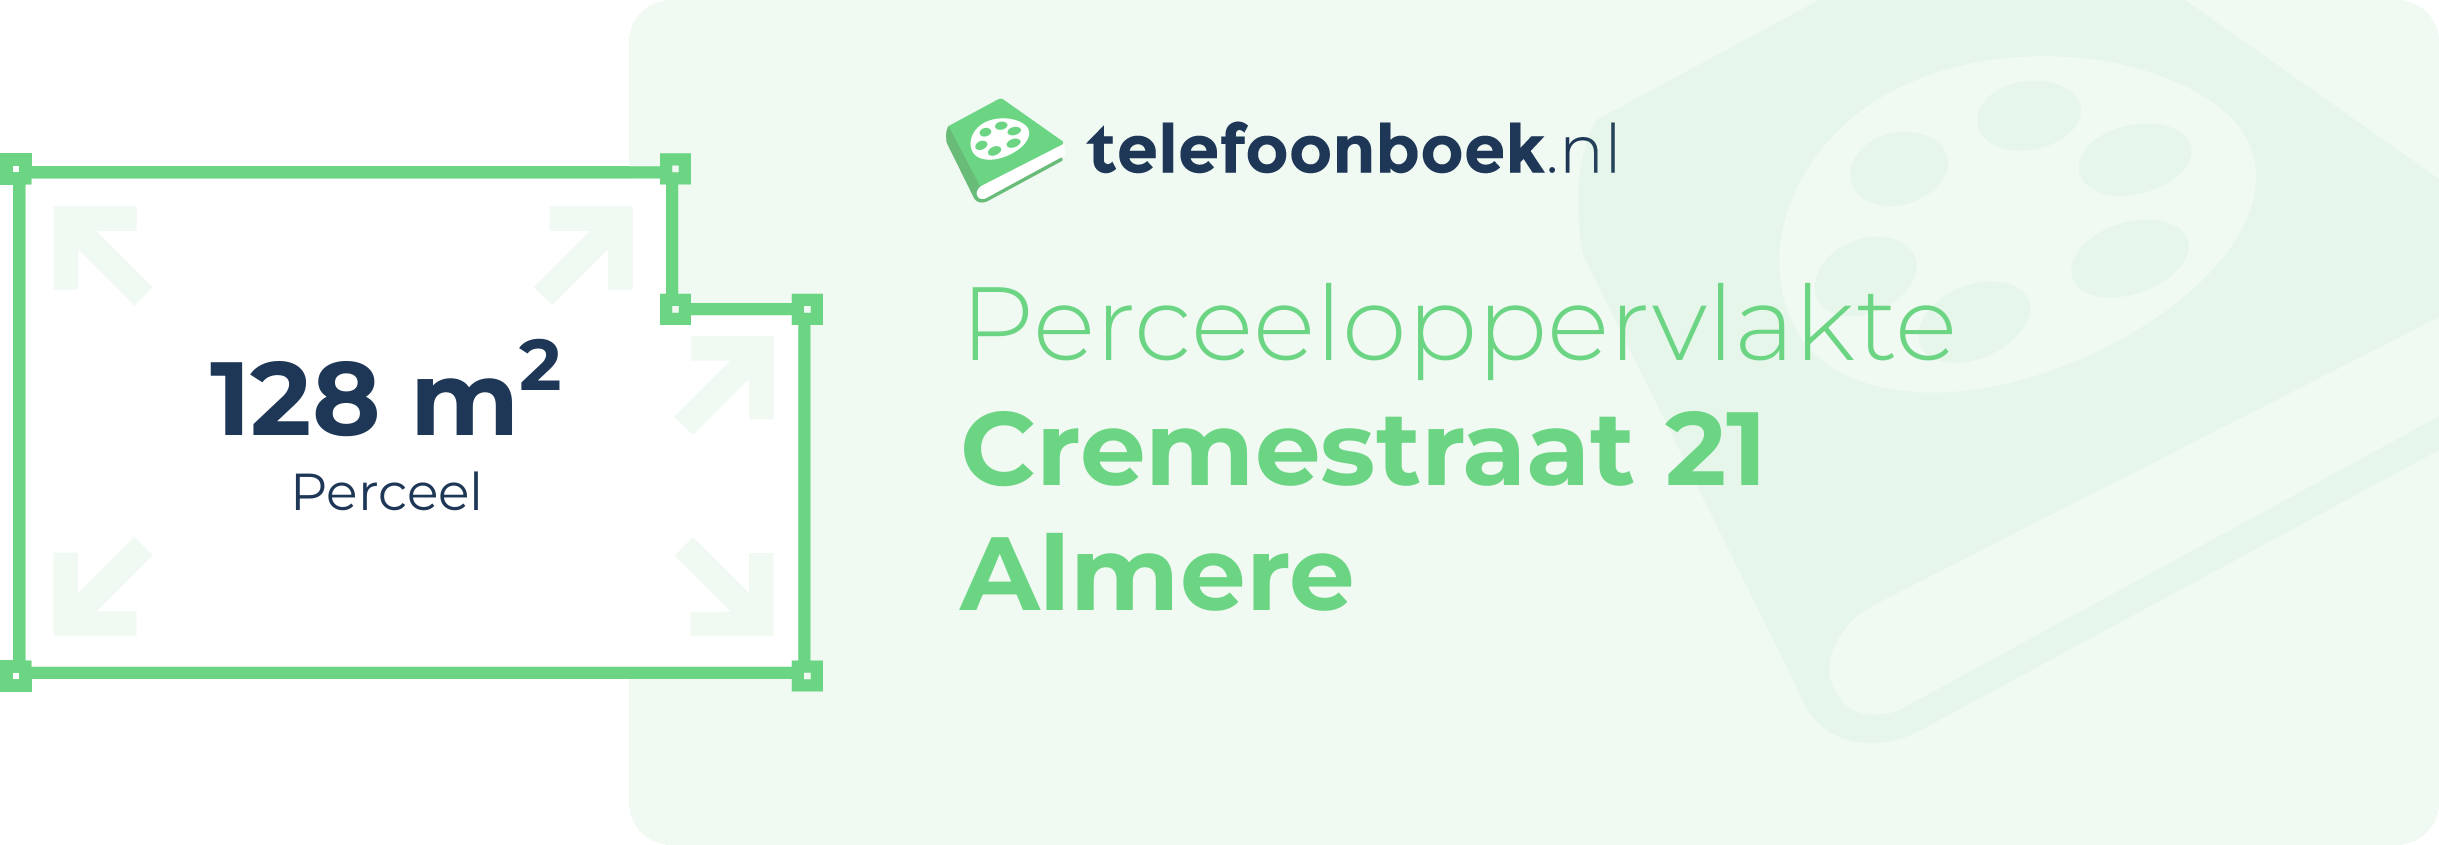 Perceeloppervlakte Cremestraat 21 Almere